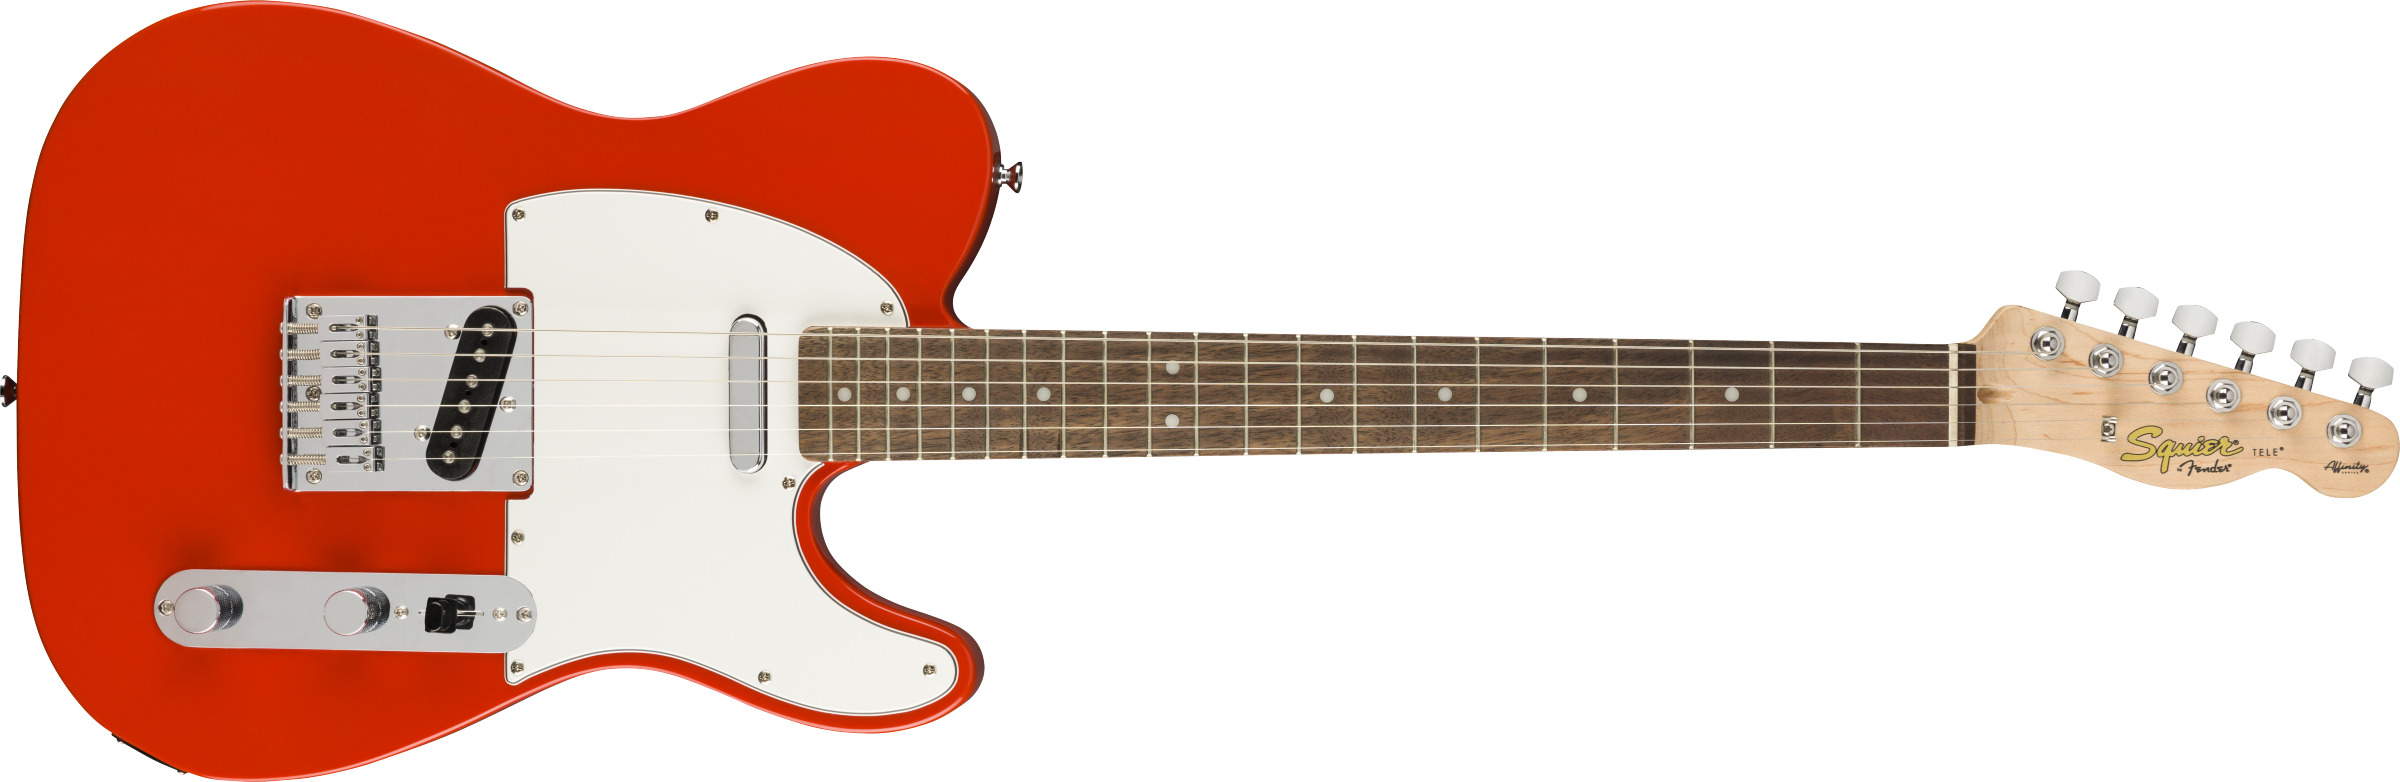 Fender Squier Affinity Telecaster elektrisk gitar